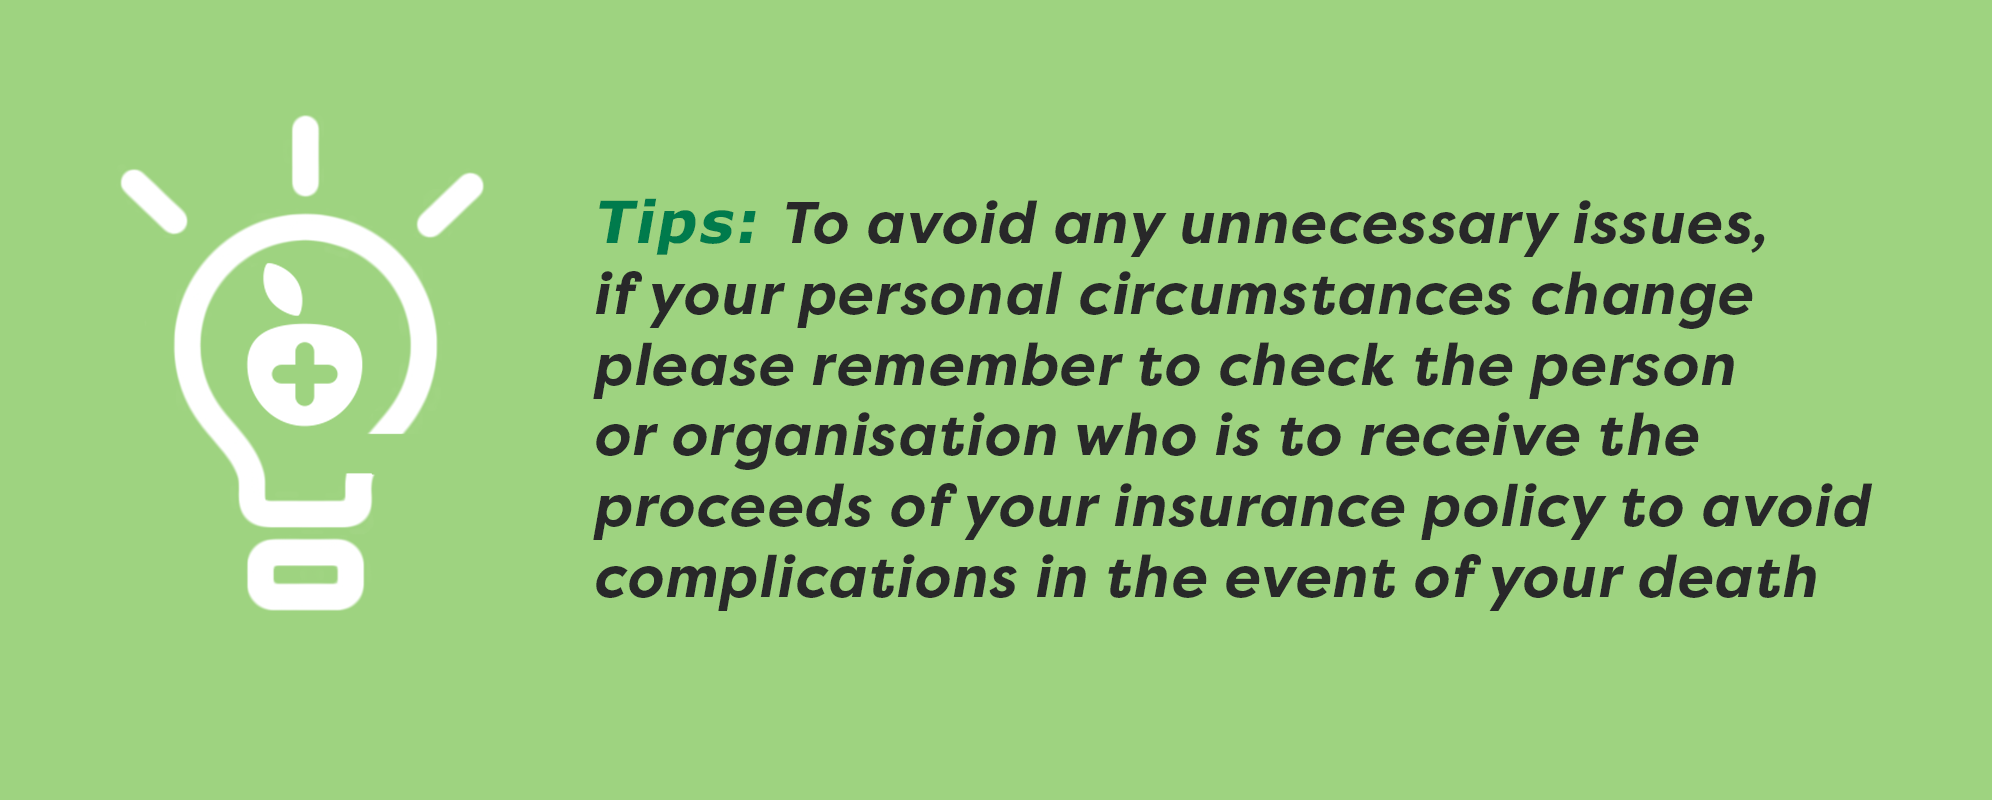 life insurance tip 3-1